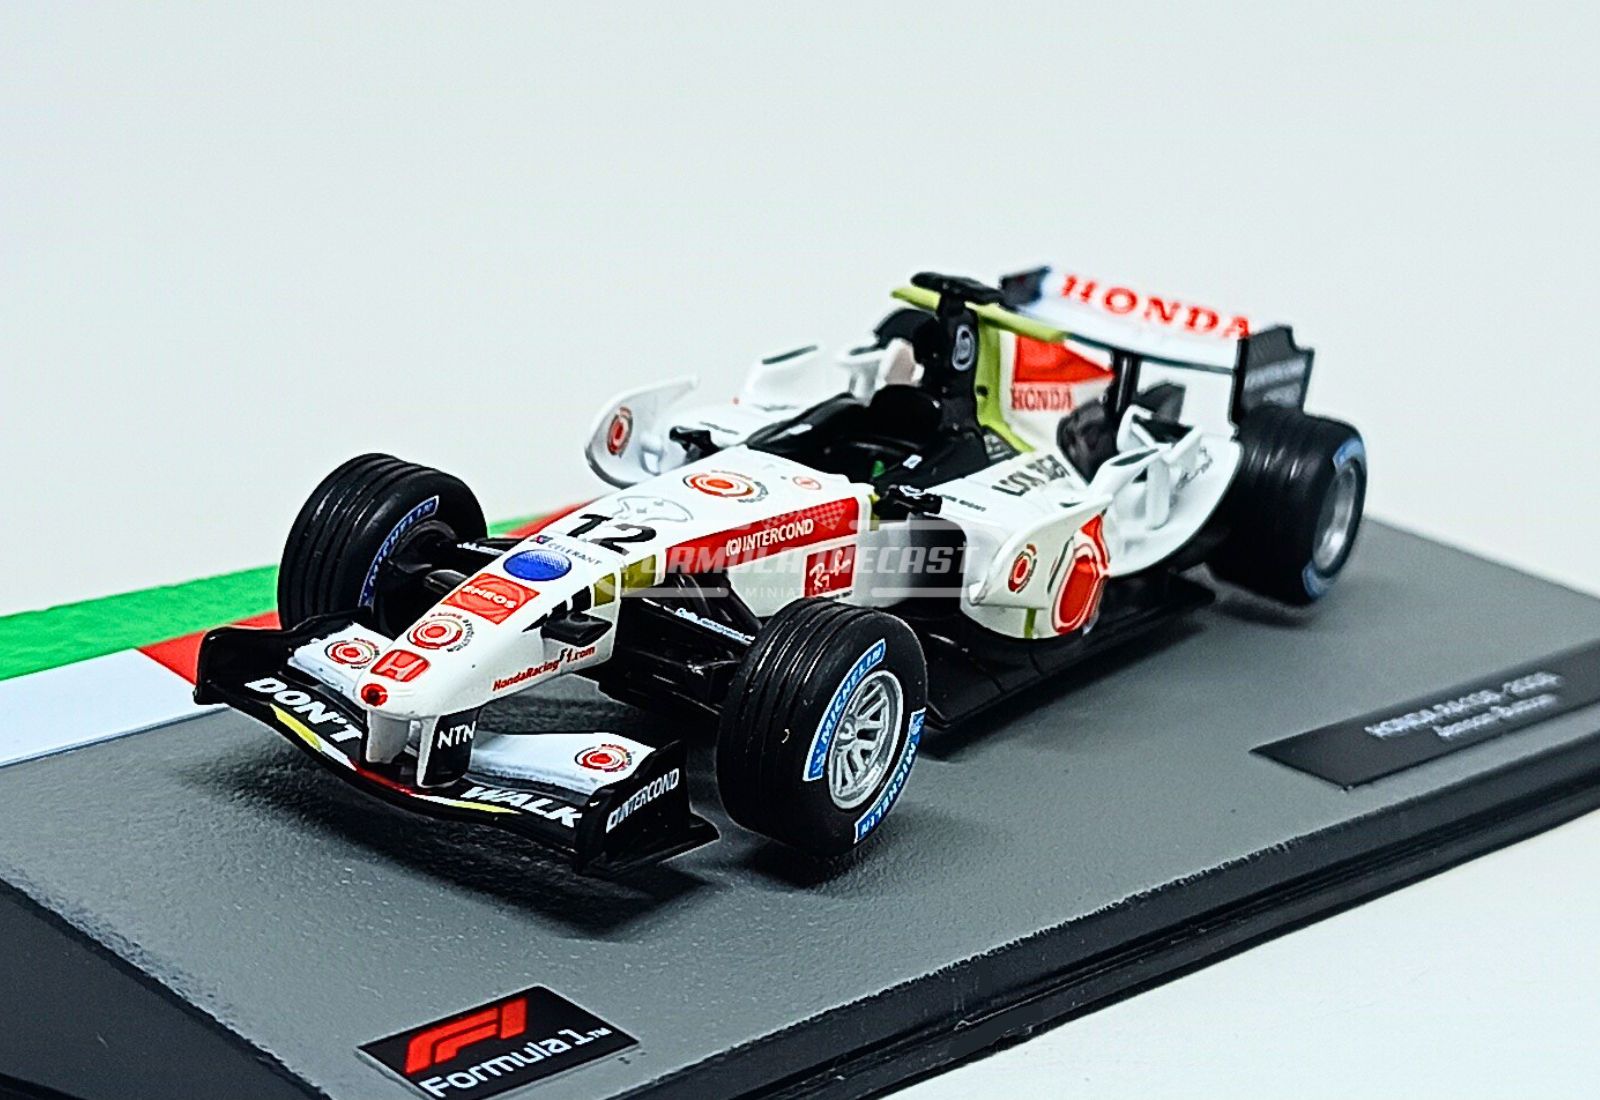 Miniatura de carro Honda RA106 #12 Jenson Button, F1 2006, escala 1:43, marca Altaya